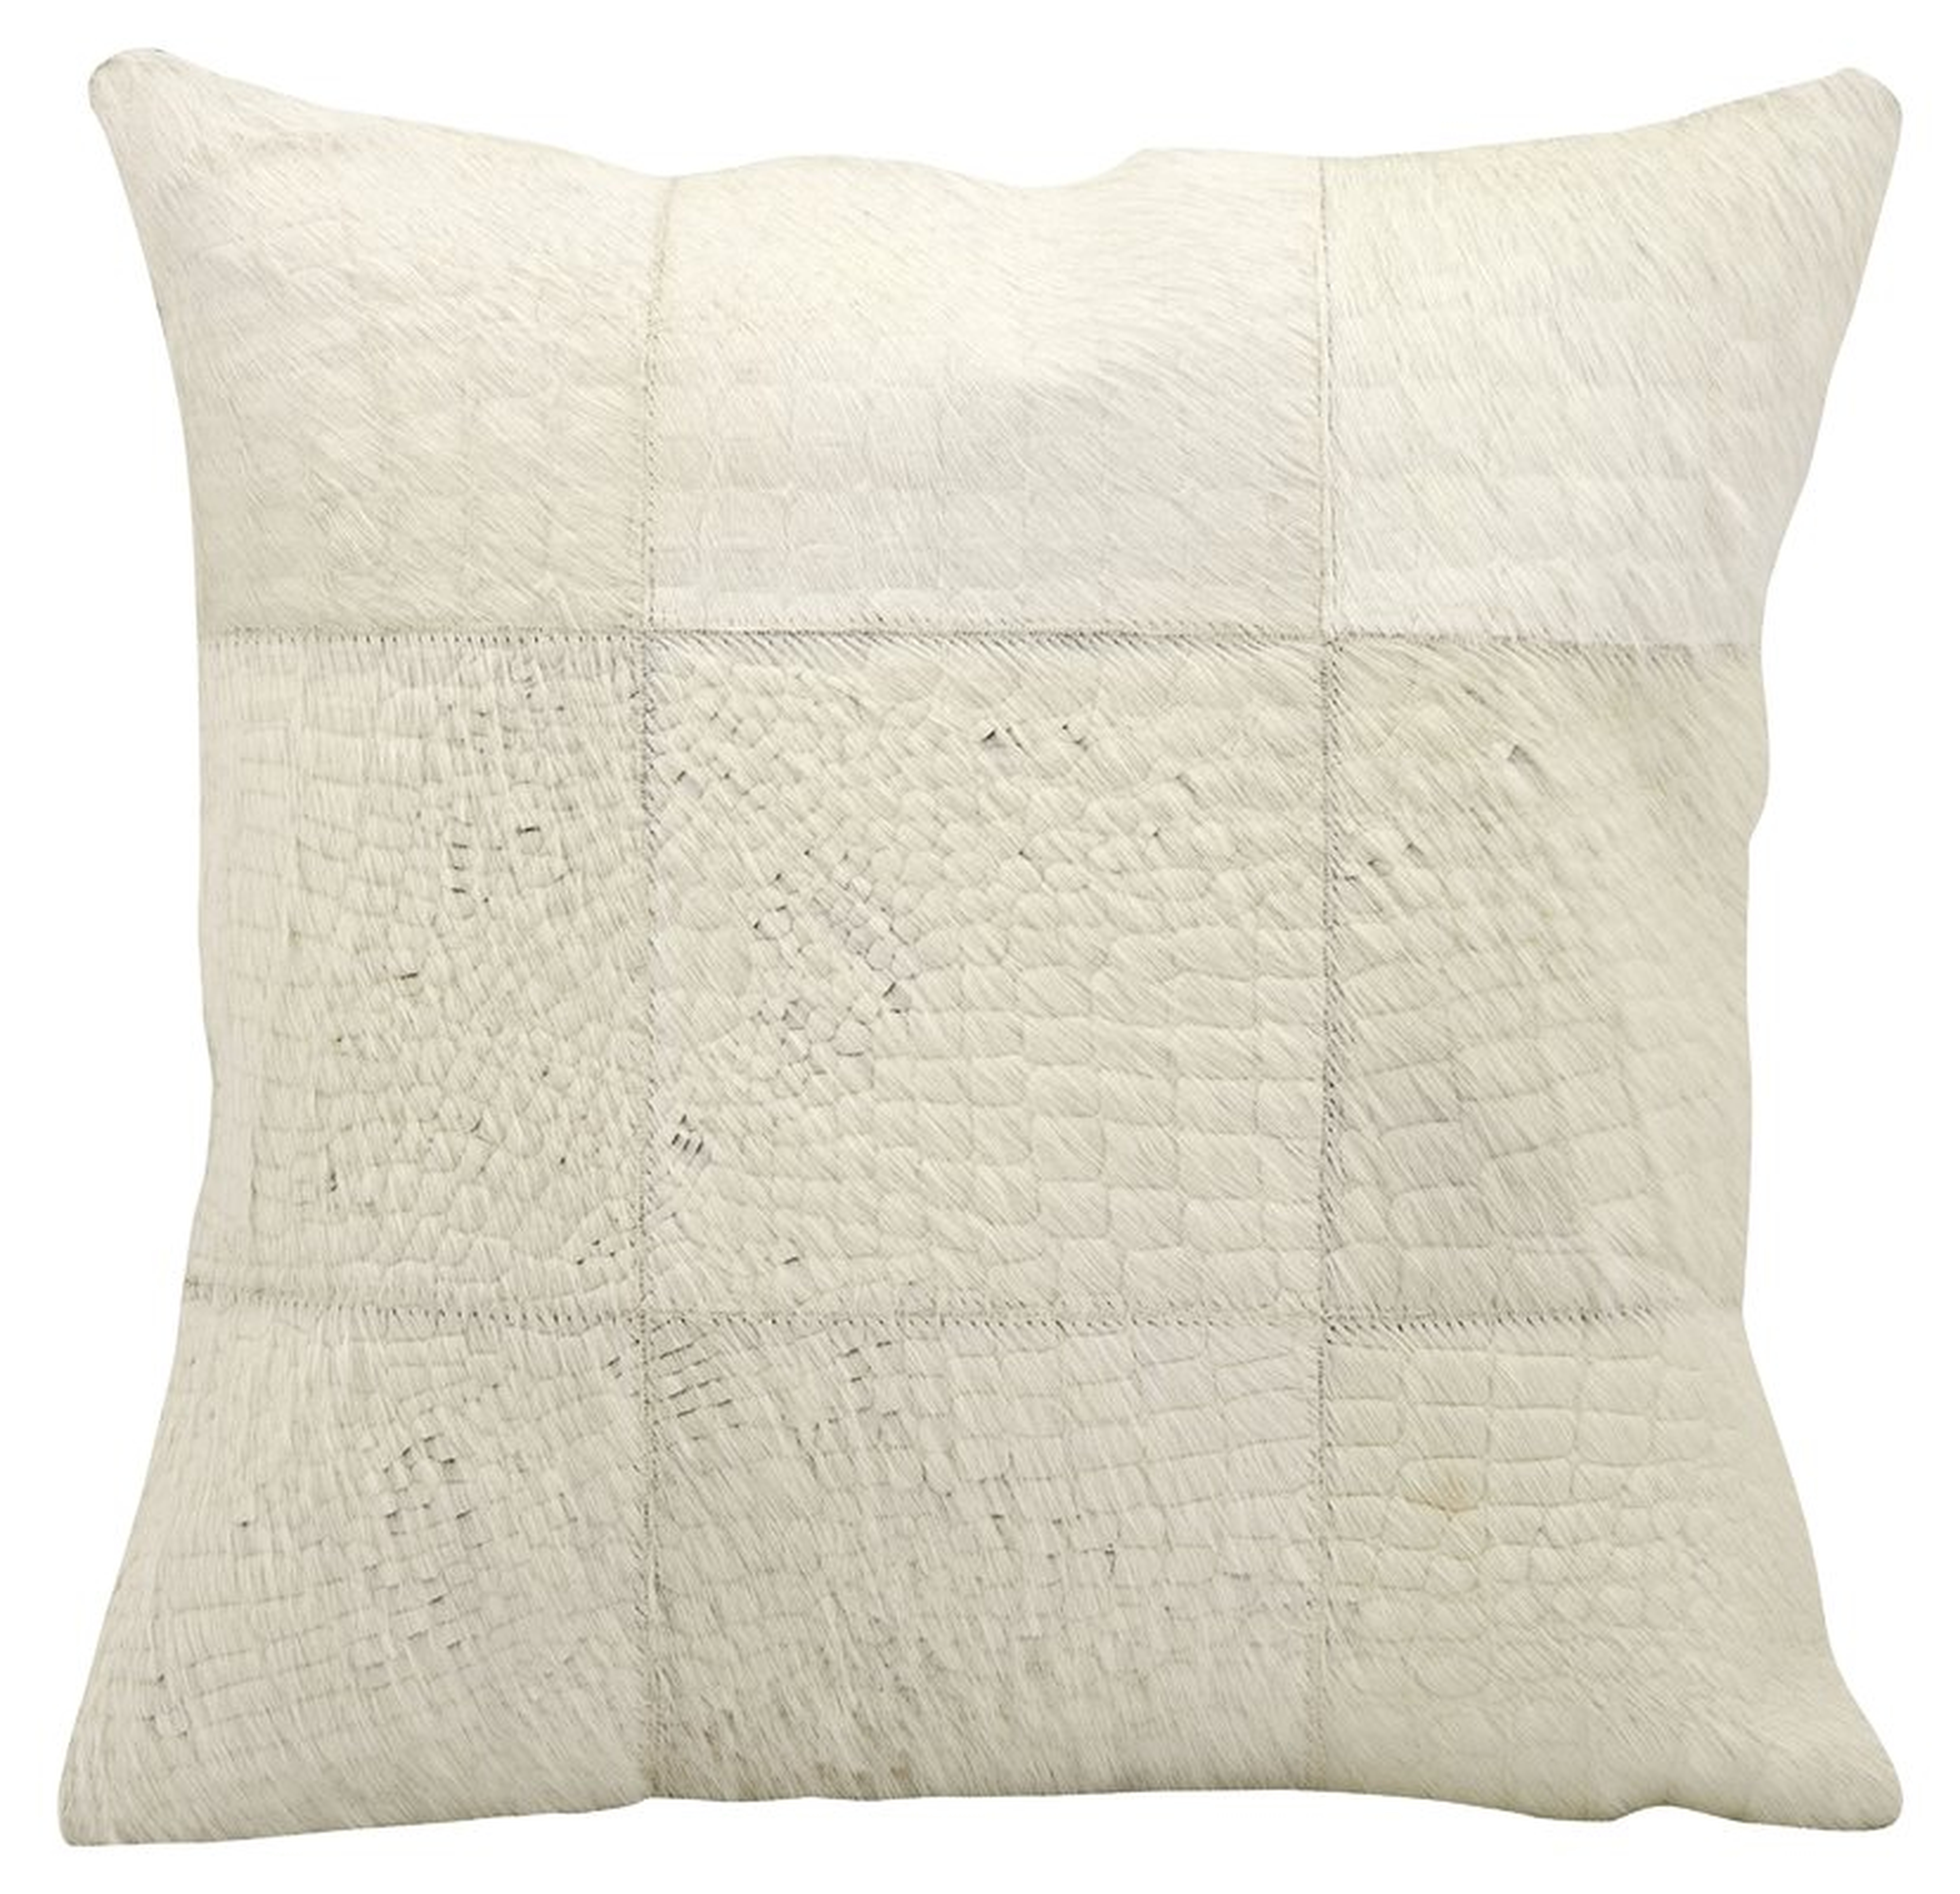 "Sulphur Natural Leather Hide Throw Pillow" White https://www.wayfair.com/decor-pillows/pdp/trent-austin-design-sulphur-leather-throw-pillow-tadn6632.html?piid=26609962 - Wayfair